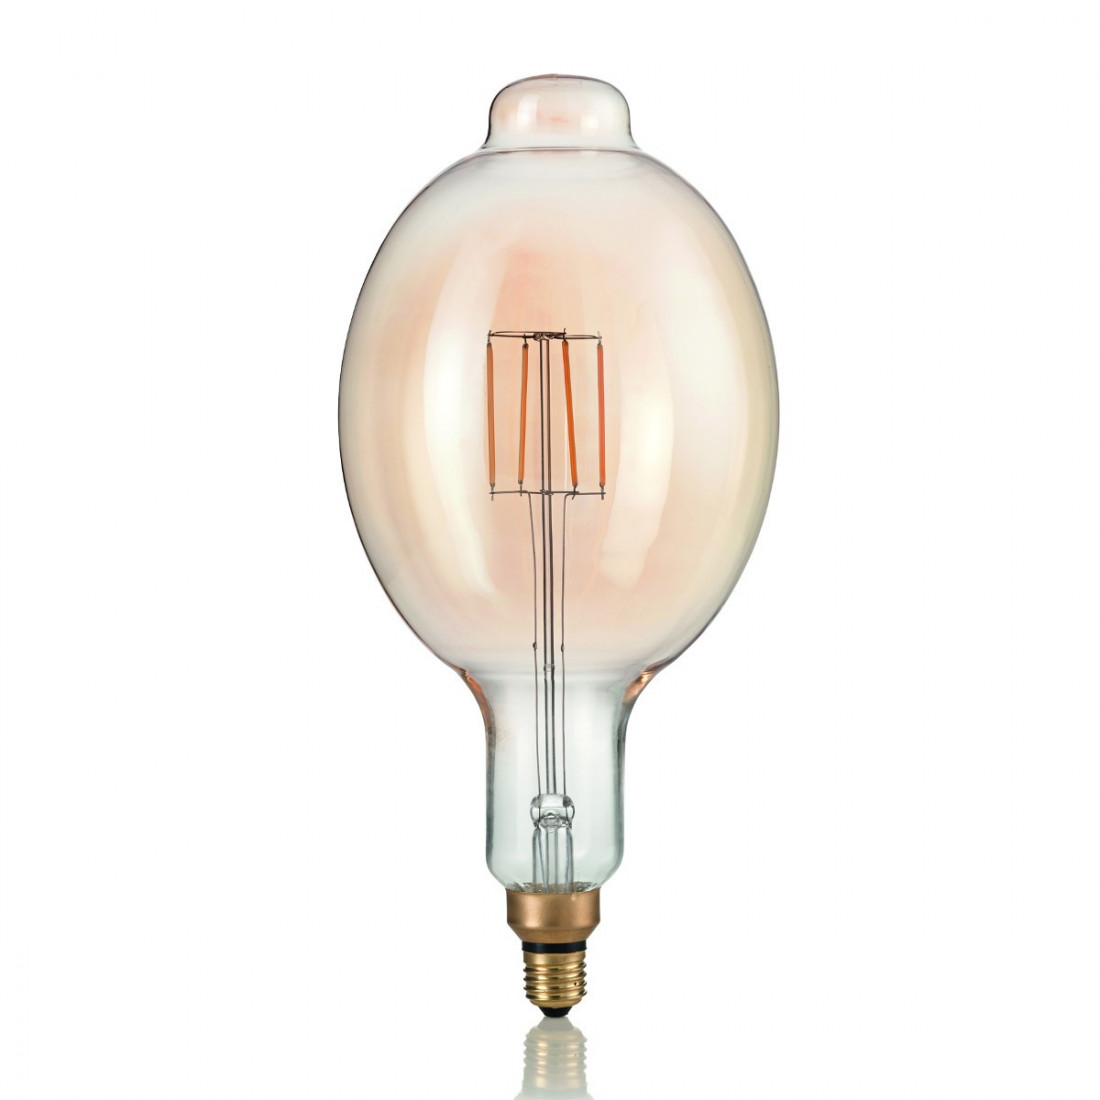 Lampadina ID-VINTAGE XL E27 4W LED 320LM vetro ambra bombato retrò luce caldissima interno